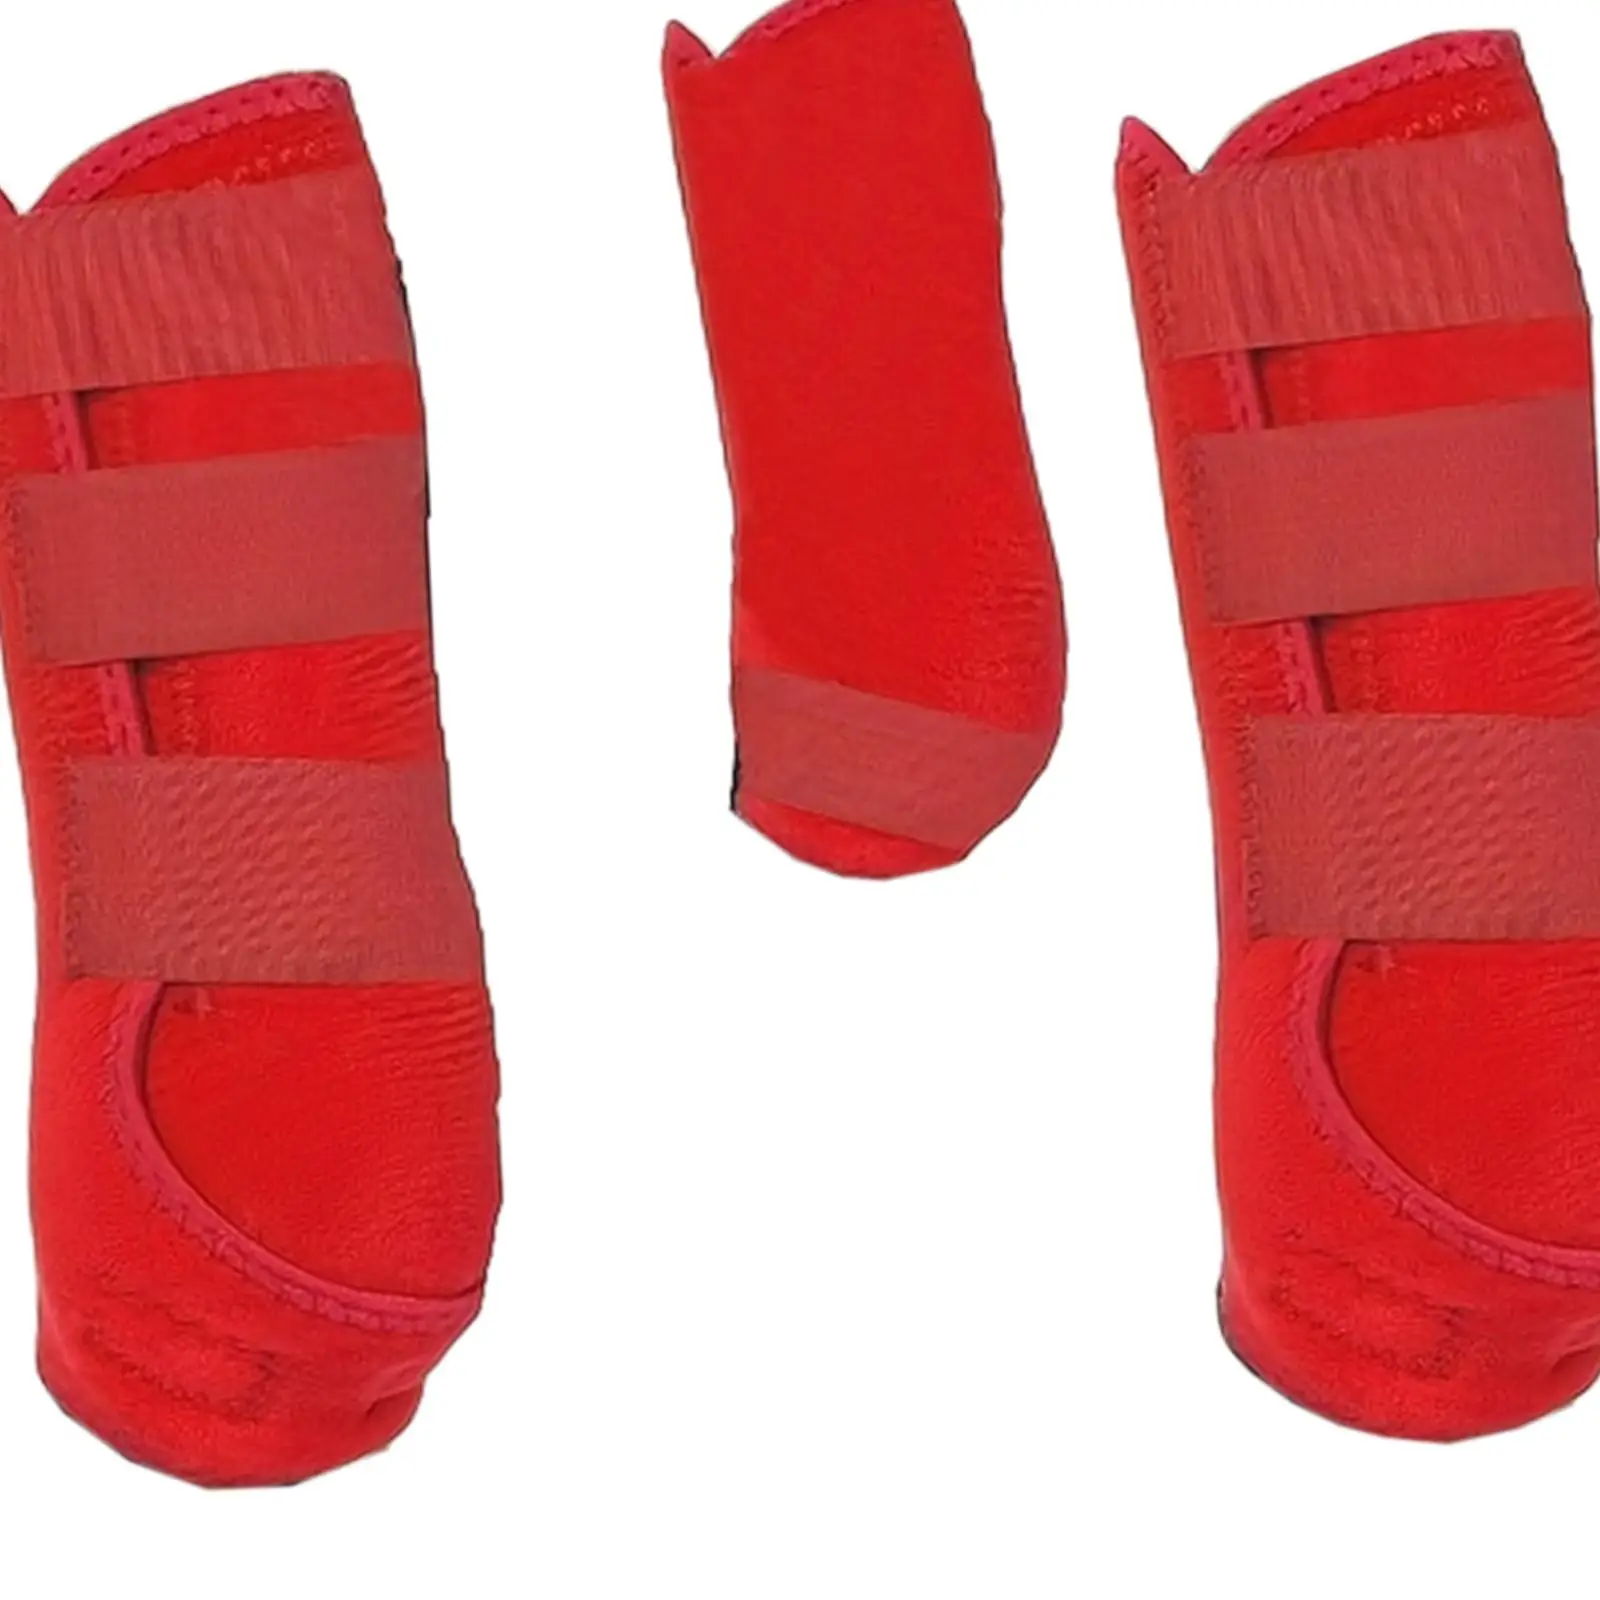 4Pcs Horse Boots Leg Protective Support Shockproof Neoprene Portable Leg Wraps